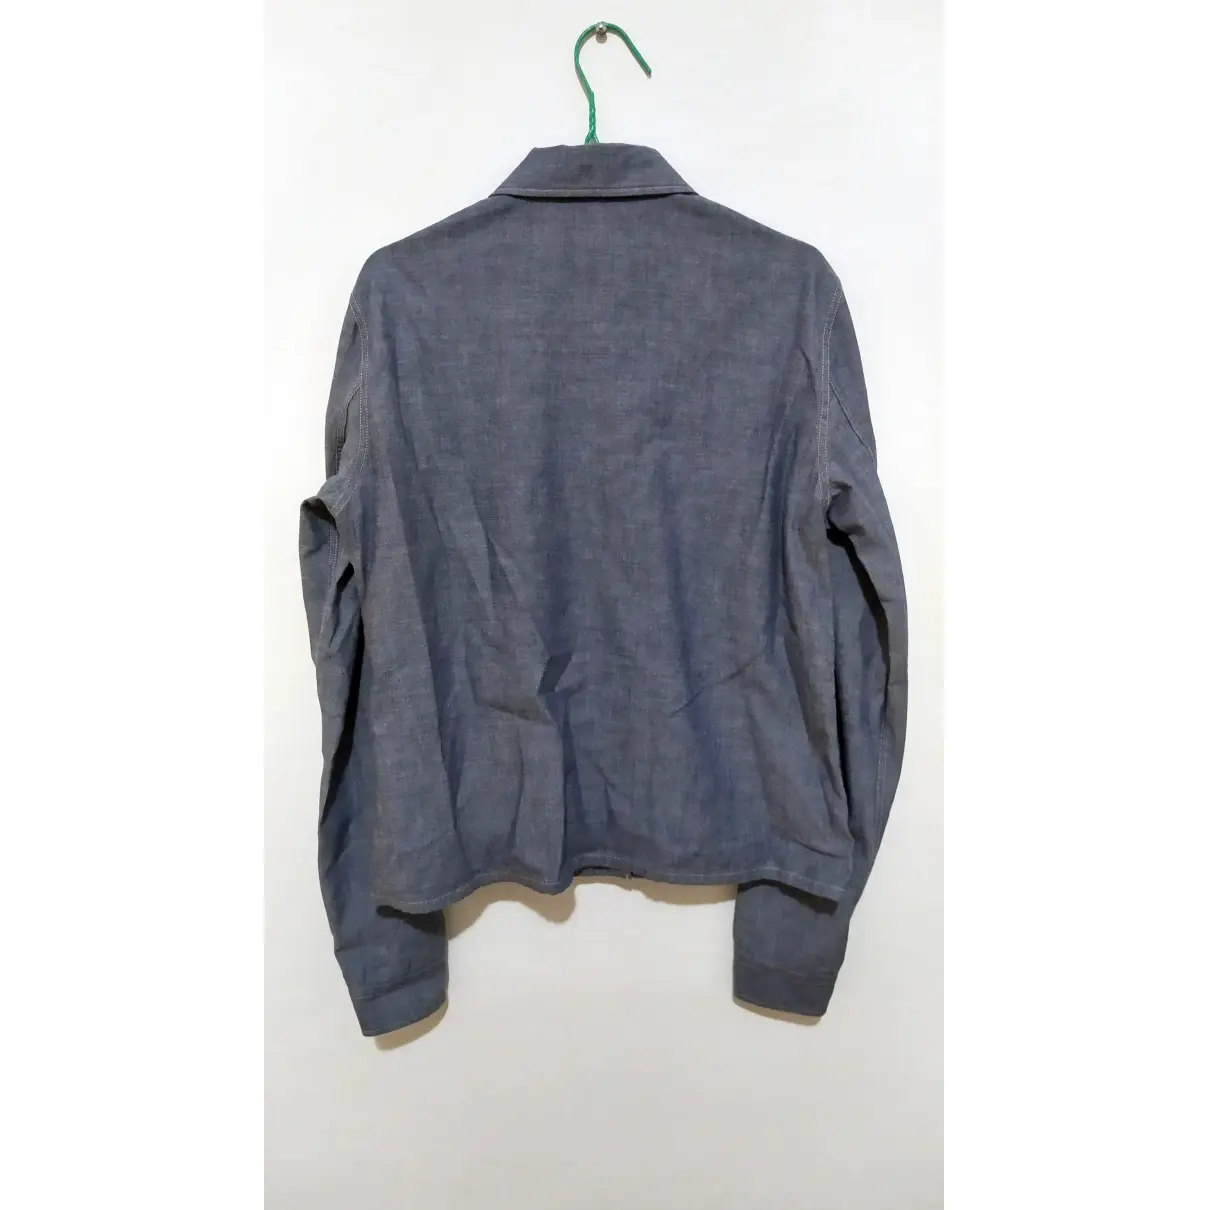 Buy Aspesi Blue Cotton Jacket online